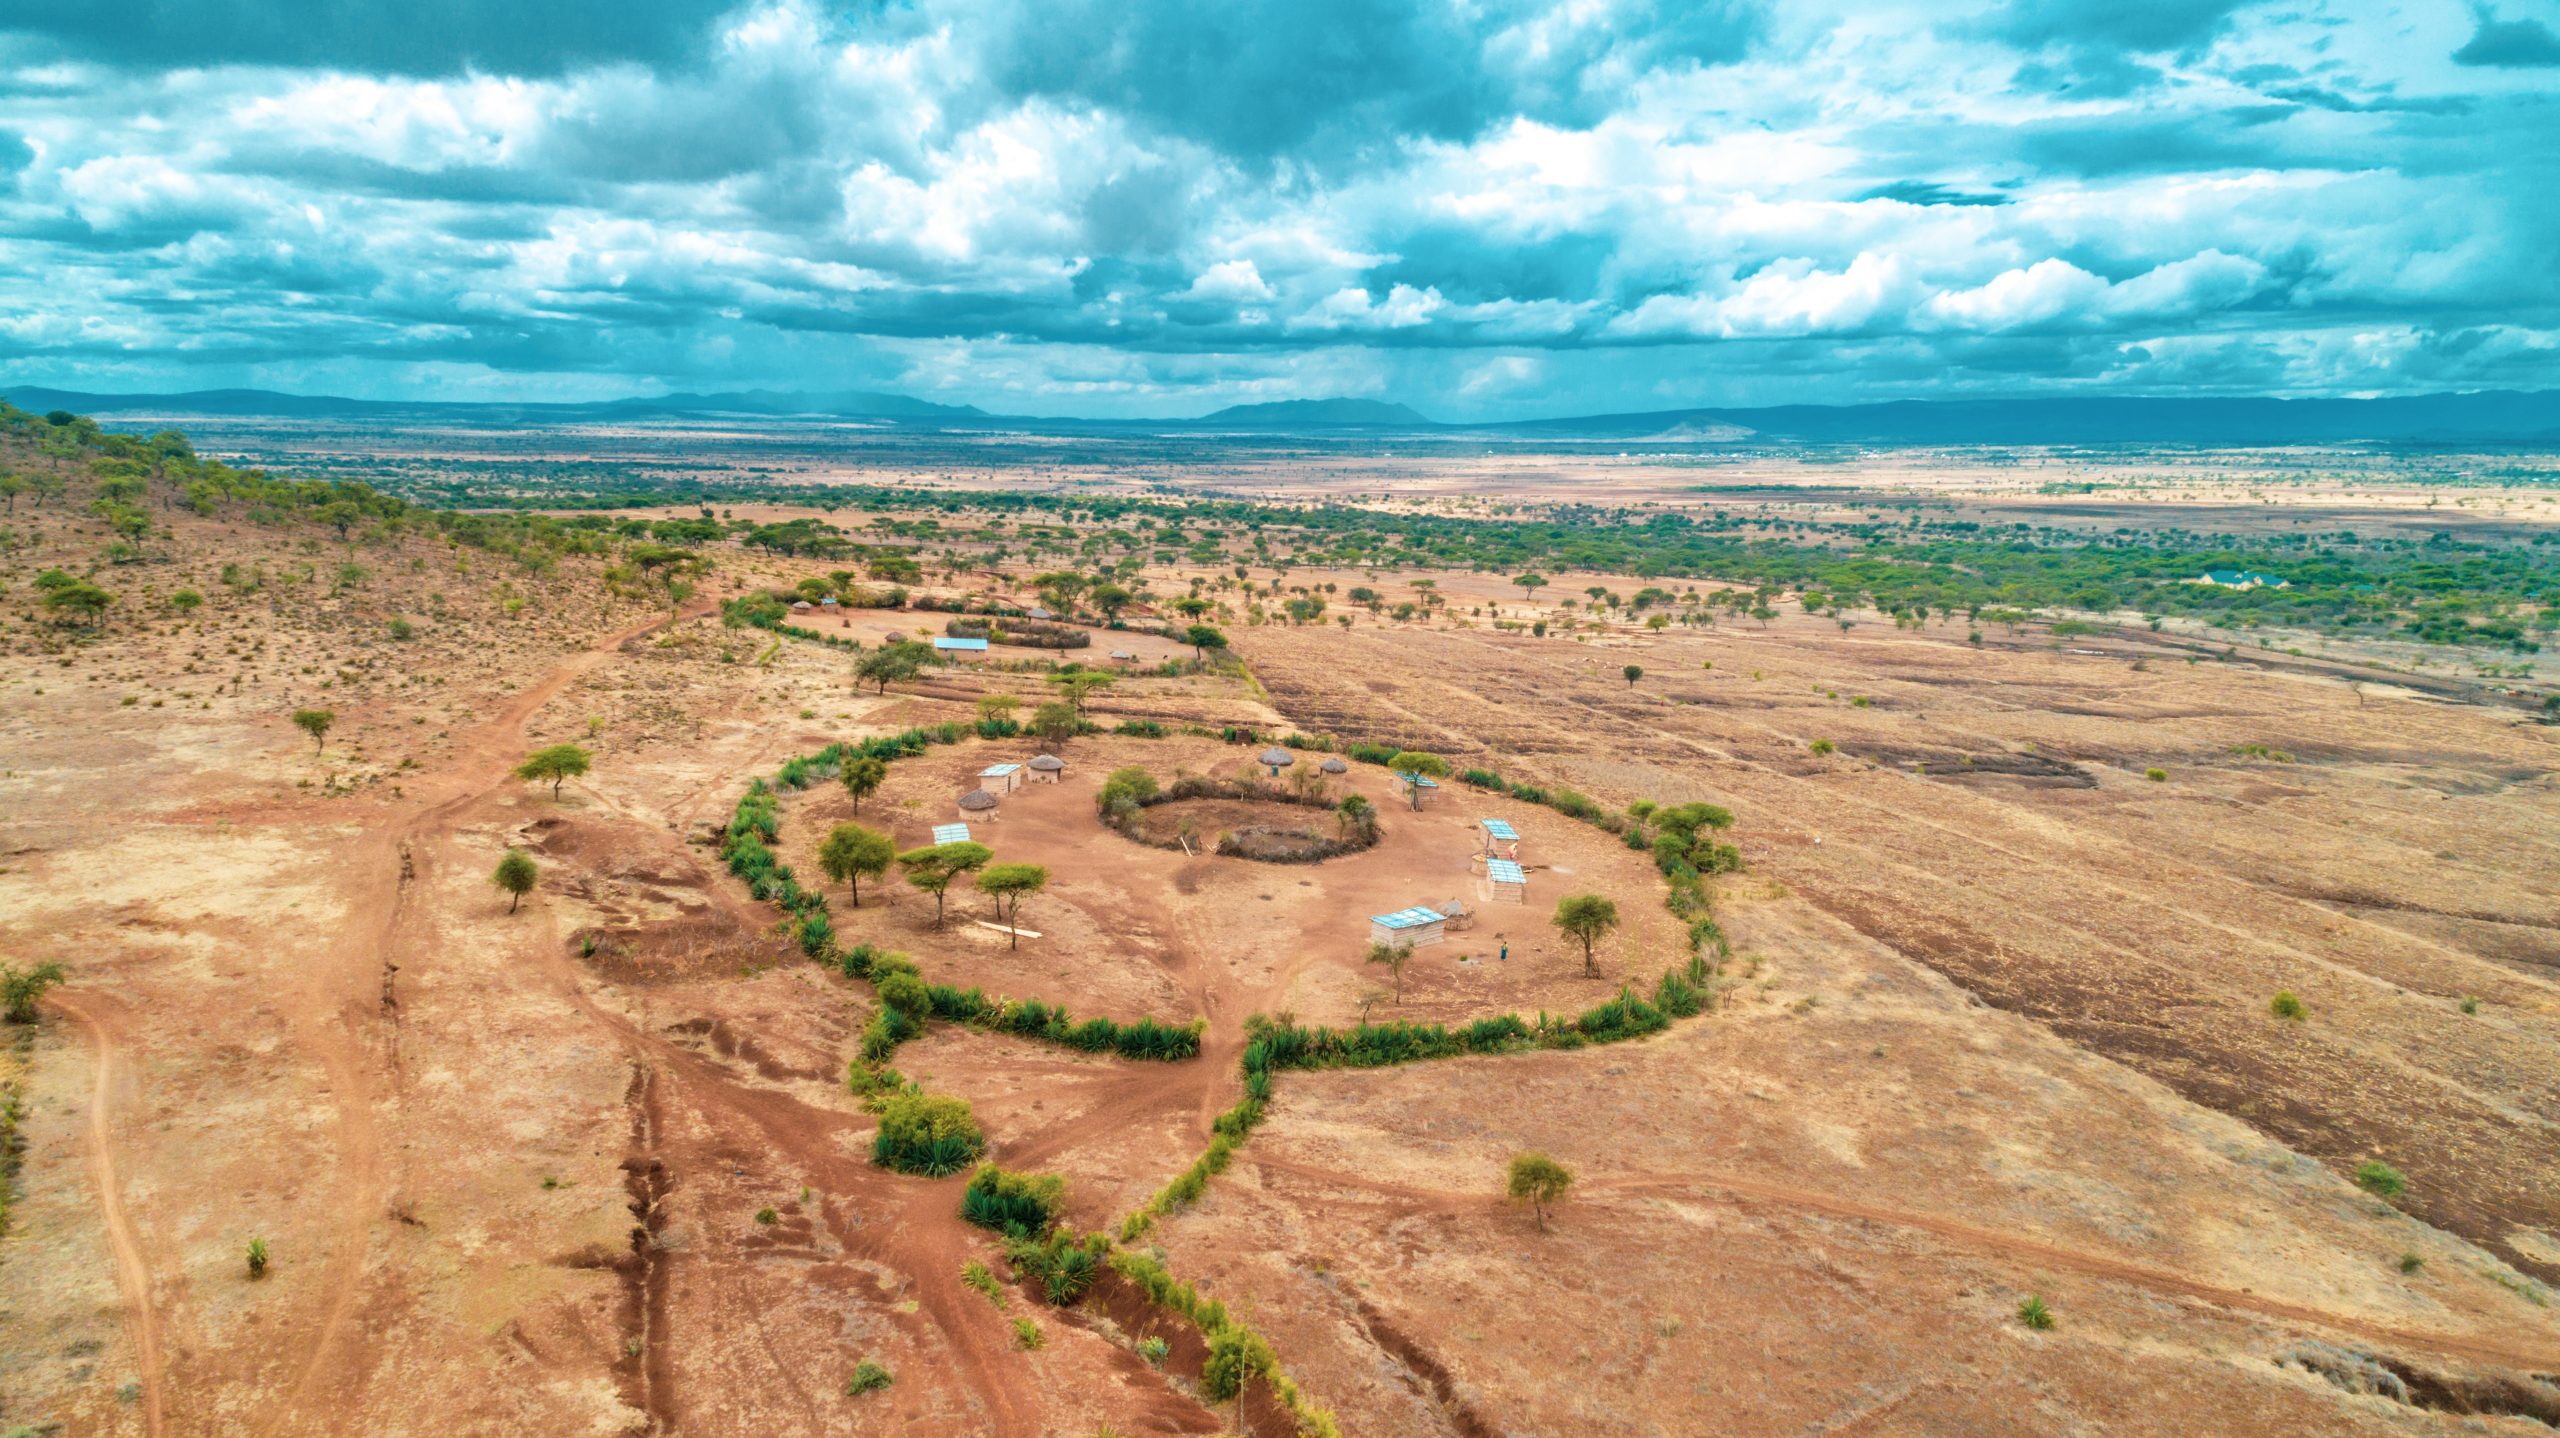 Restoration of the Arid and Semi Arid Lands of Kenya